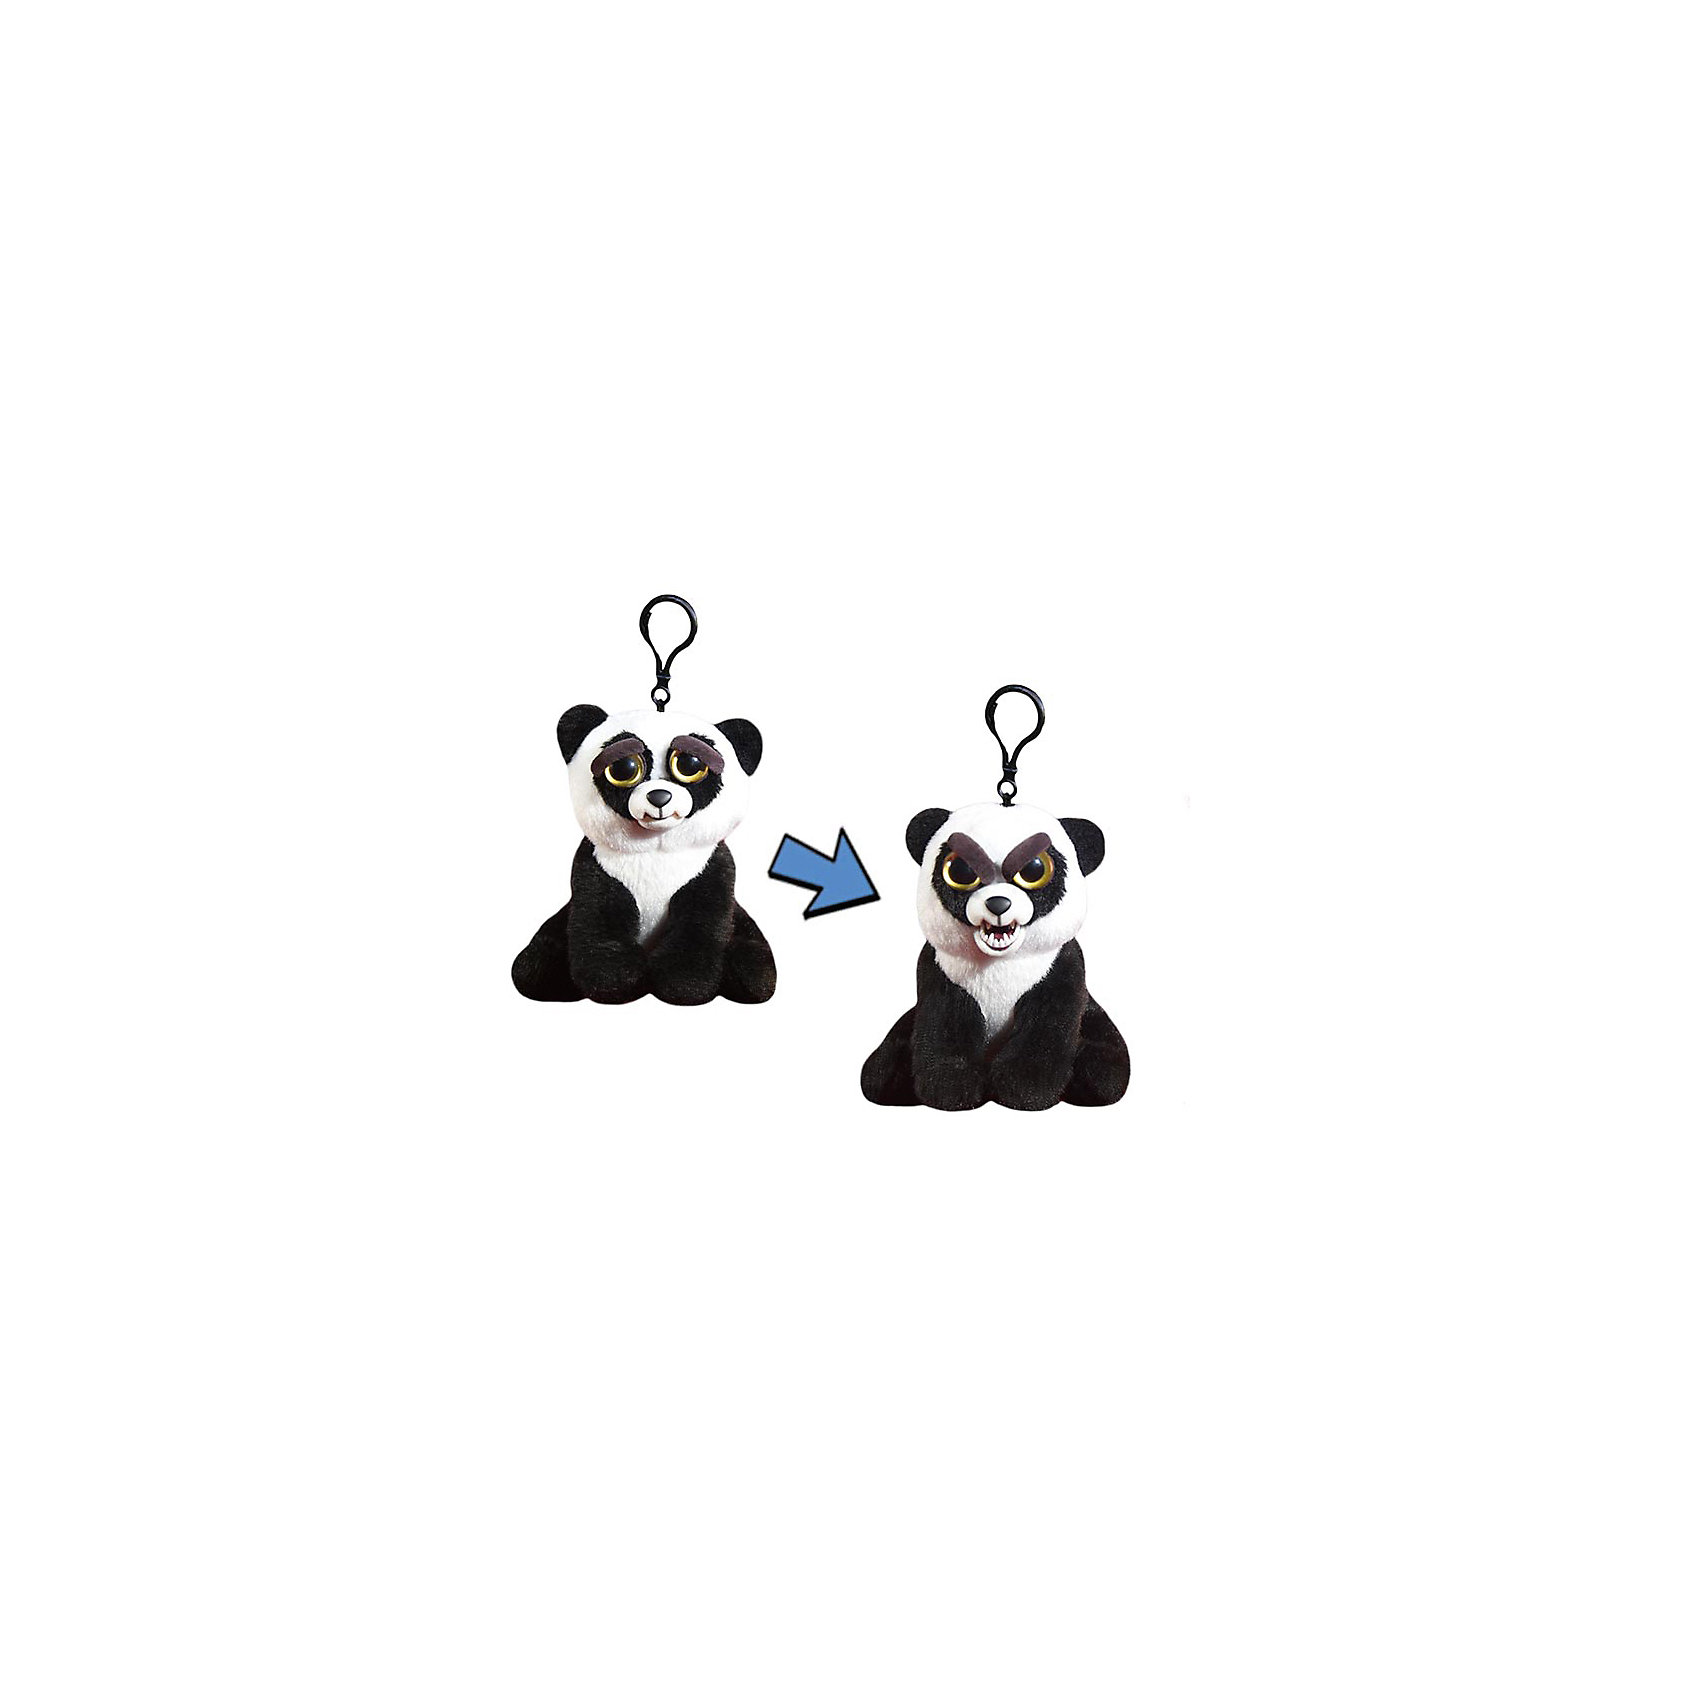 Мягкая игрушка-брелок Панда, 11 см Feisty Pets 16690134